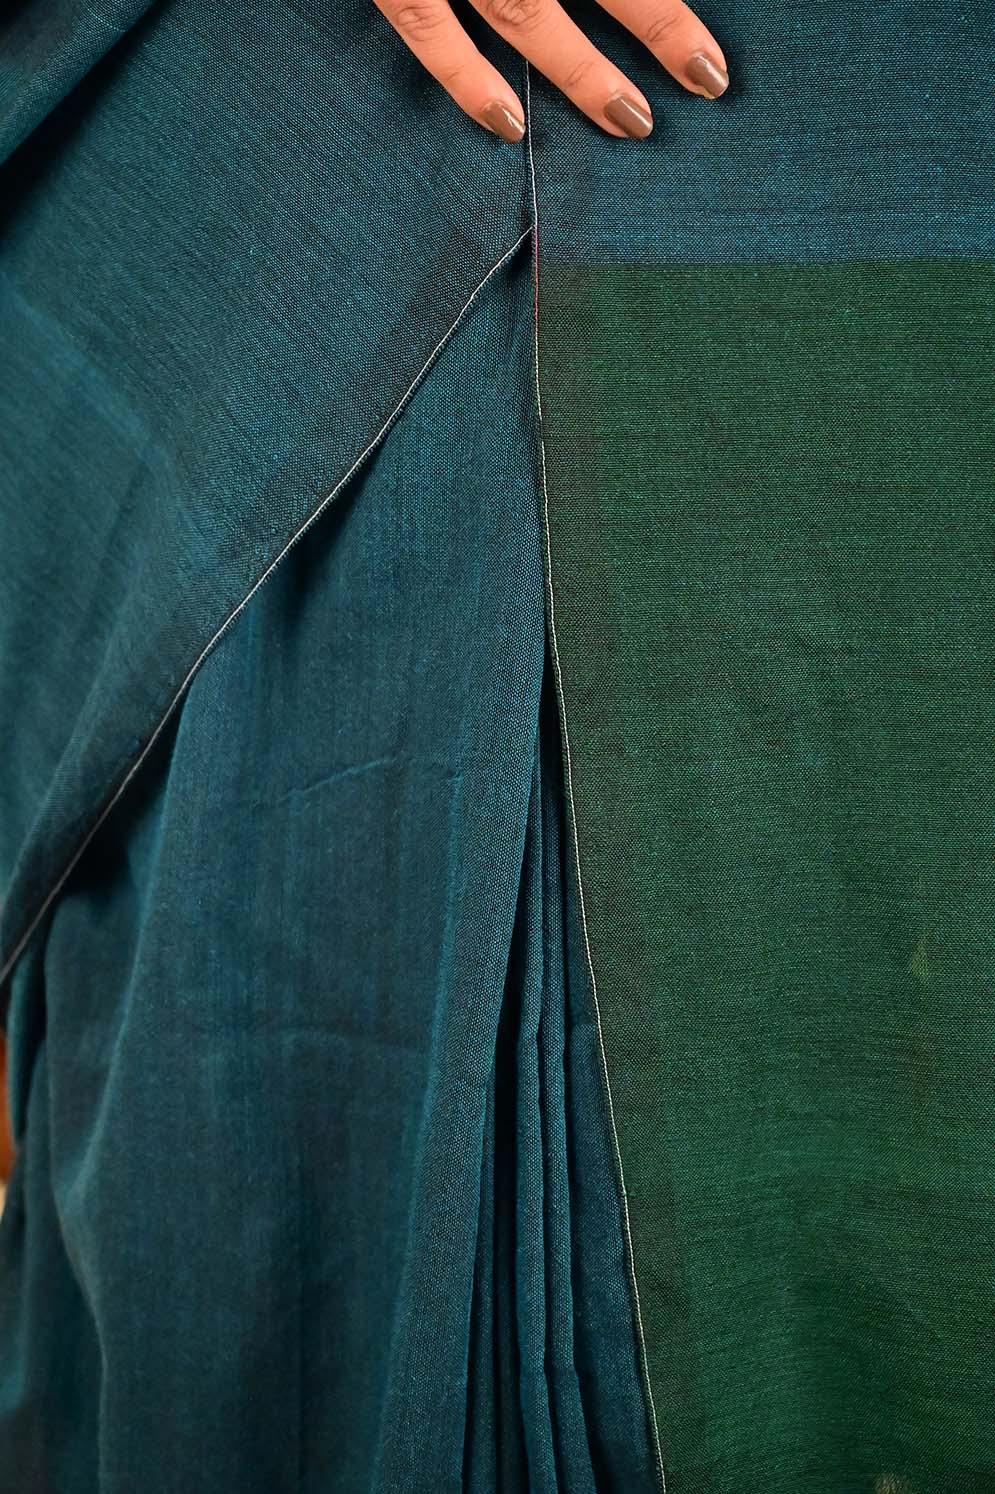 Ready to wear Beautiful Khadi Cotton Handloom With Tassels on Pallu  Wrap in 1 minute Saree - Isadora Life